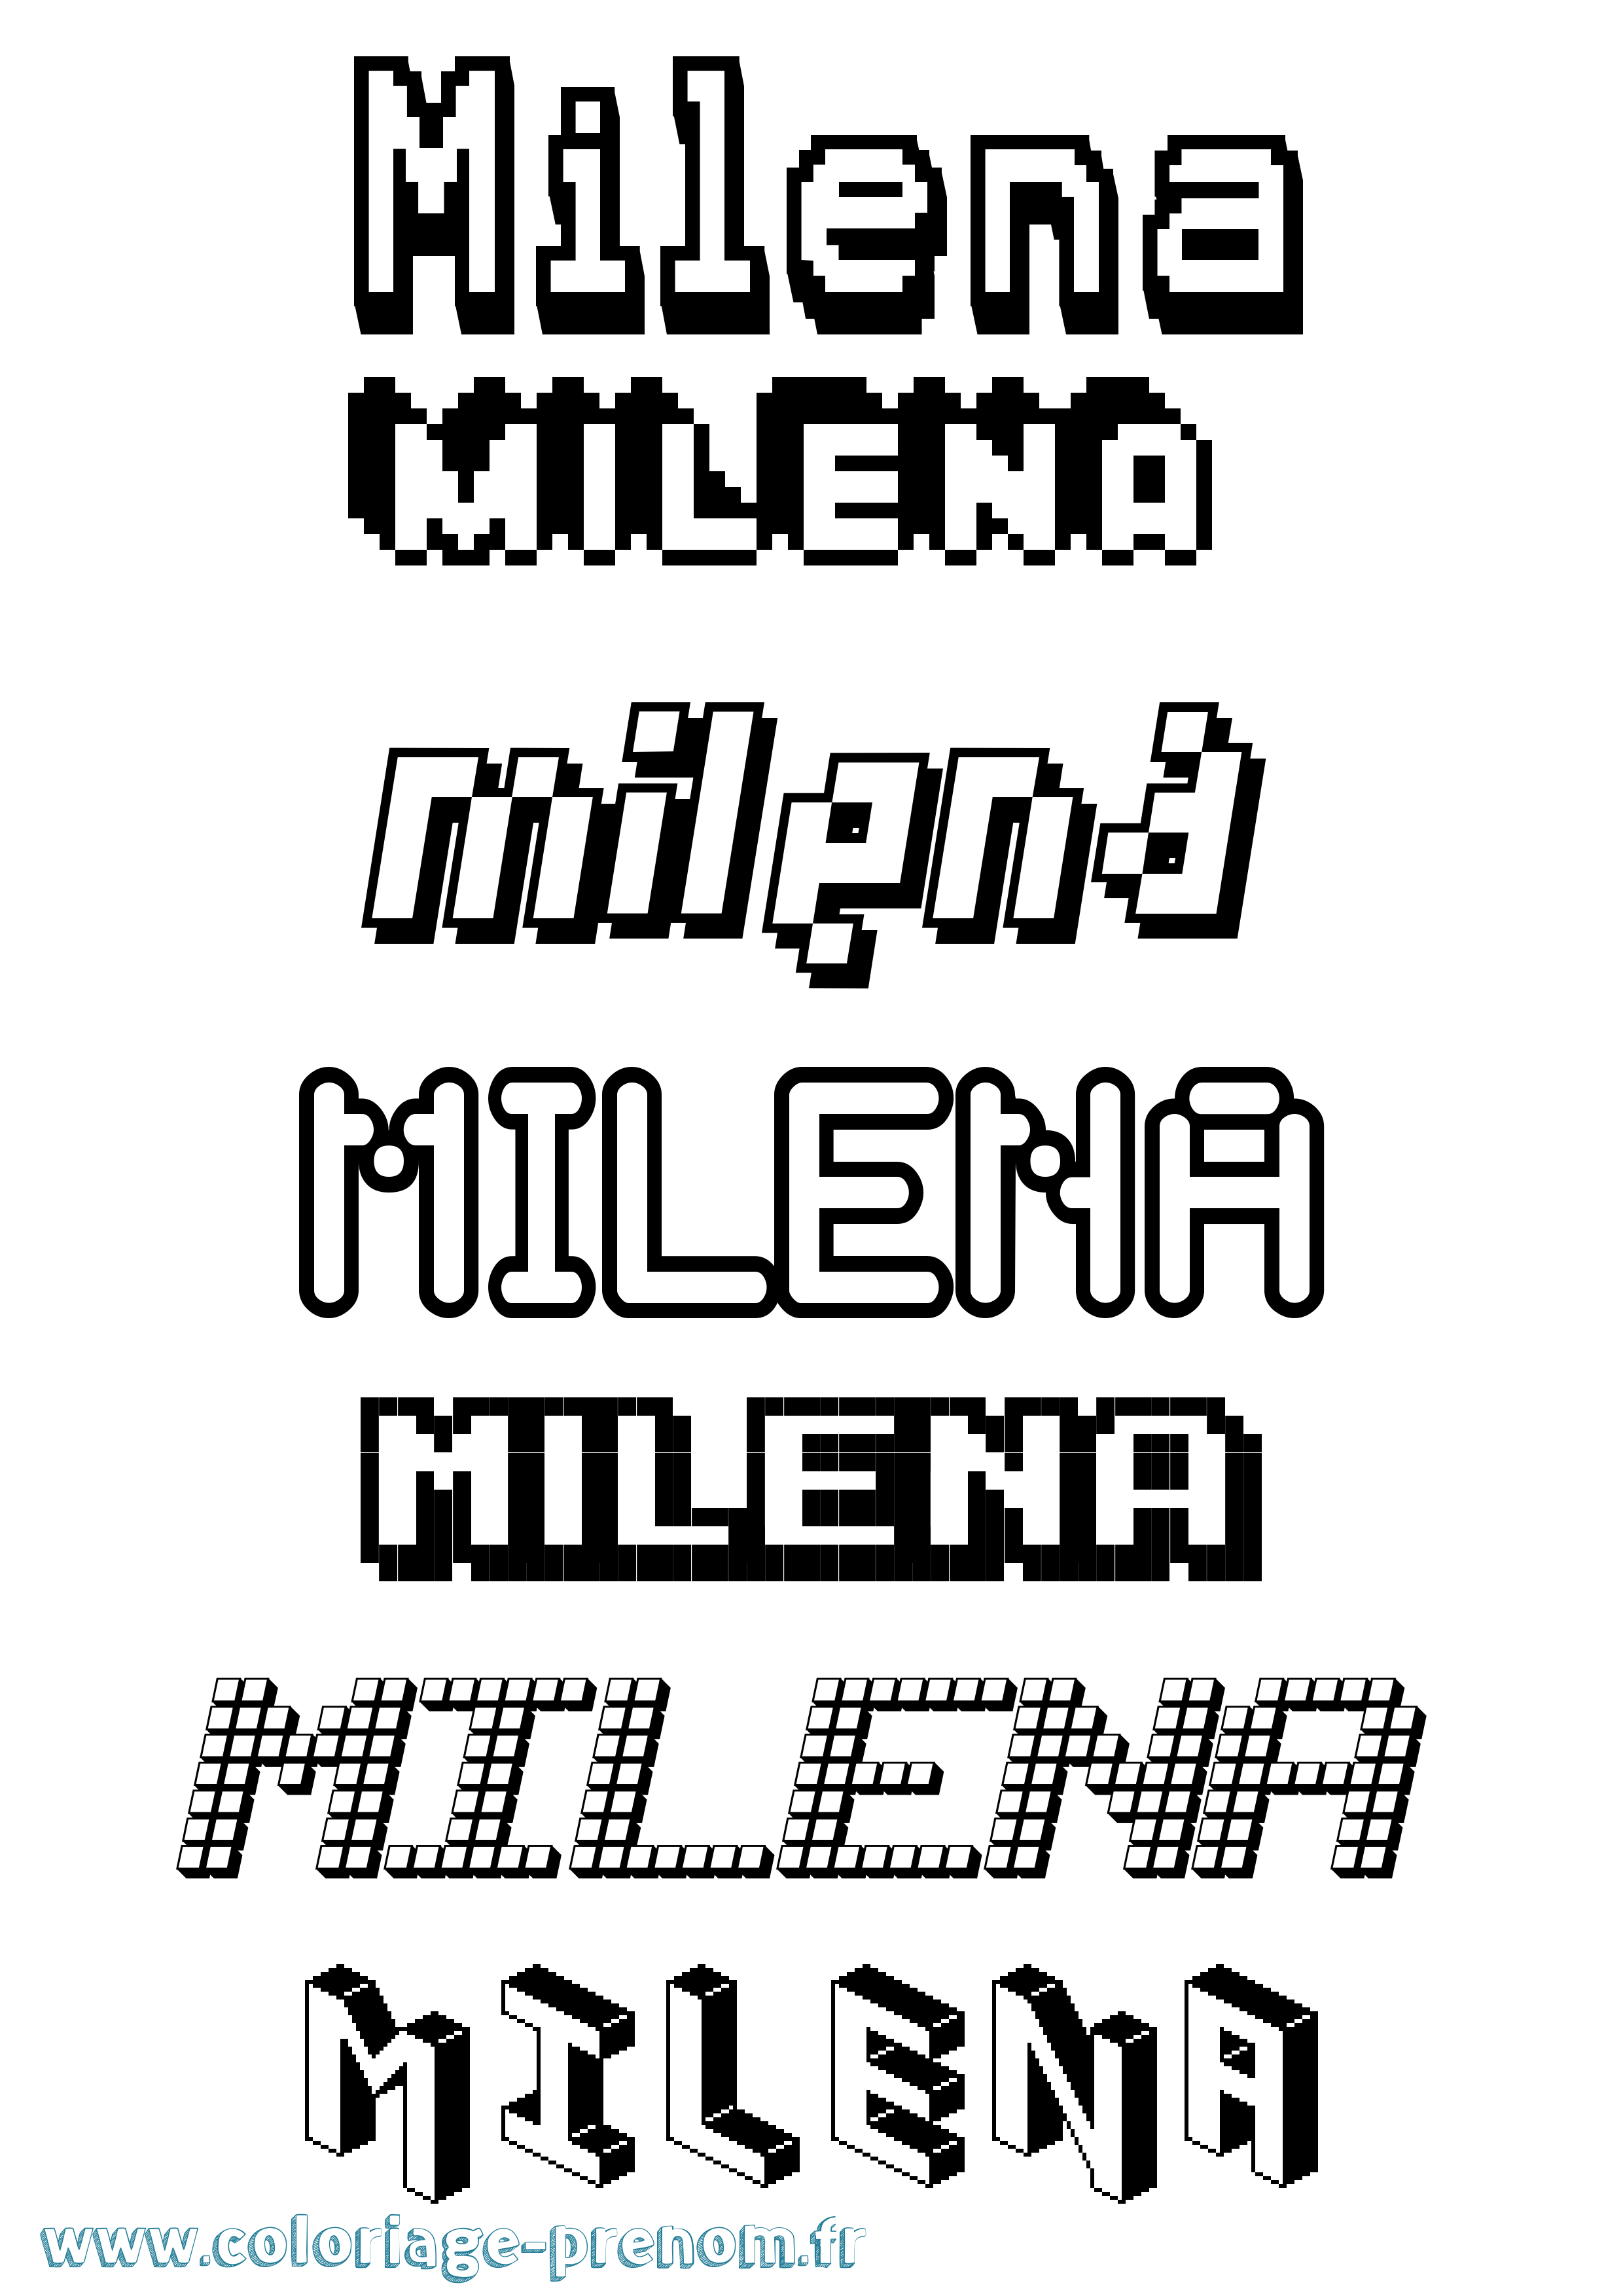 Coloriage prénom Milena Pixel